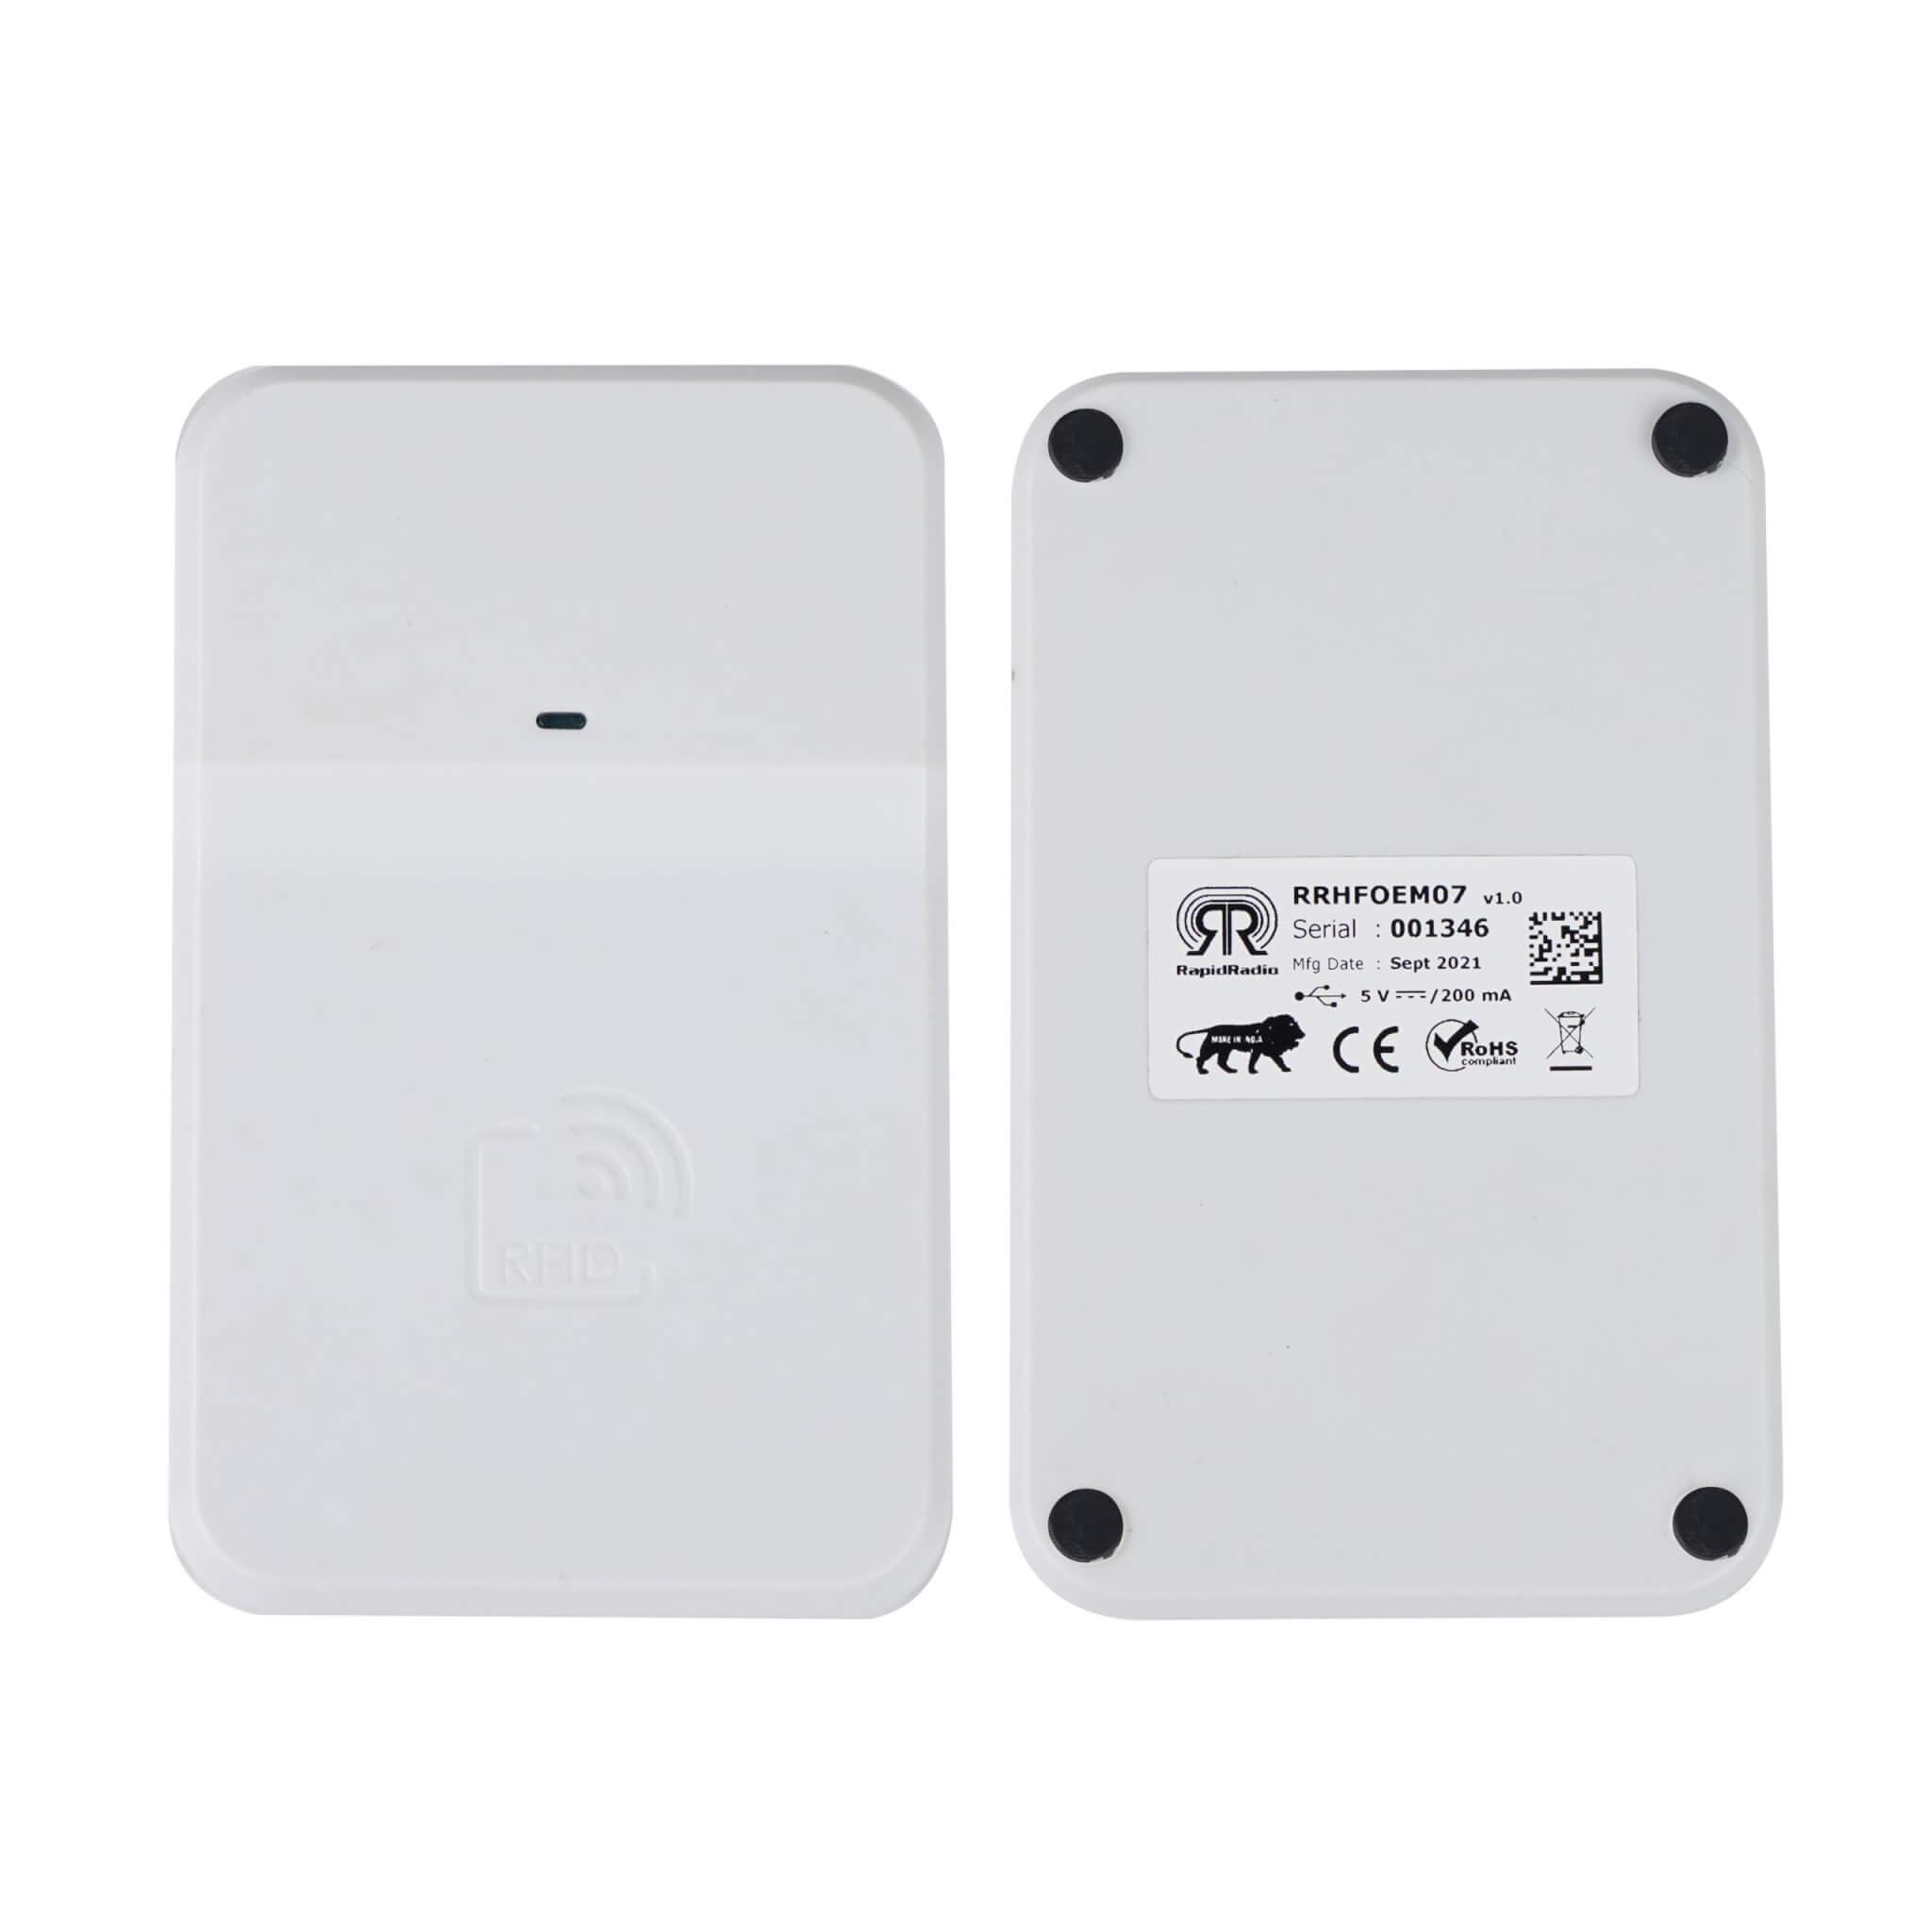 NFC Reader Writer, 424kbps Lightweight 13.56MHz IC Card Reader Anti  Collision Function USB 2.0 Full Speed For FeliCa NFC 